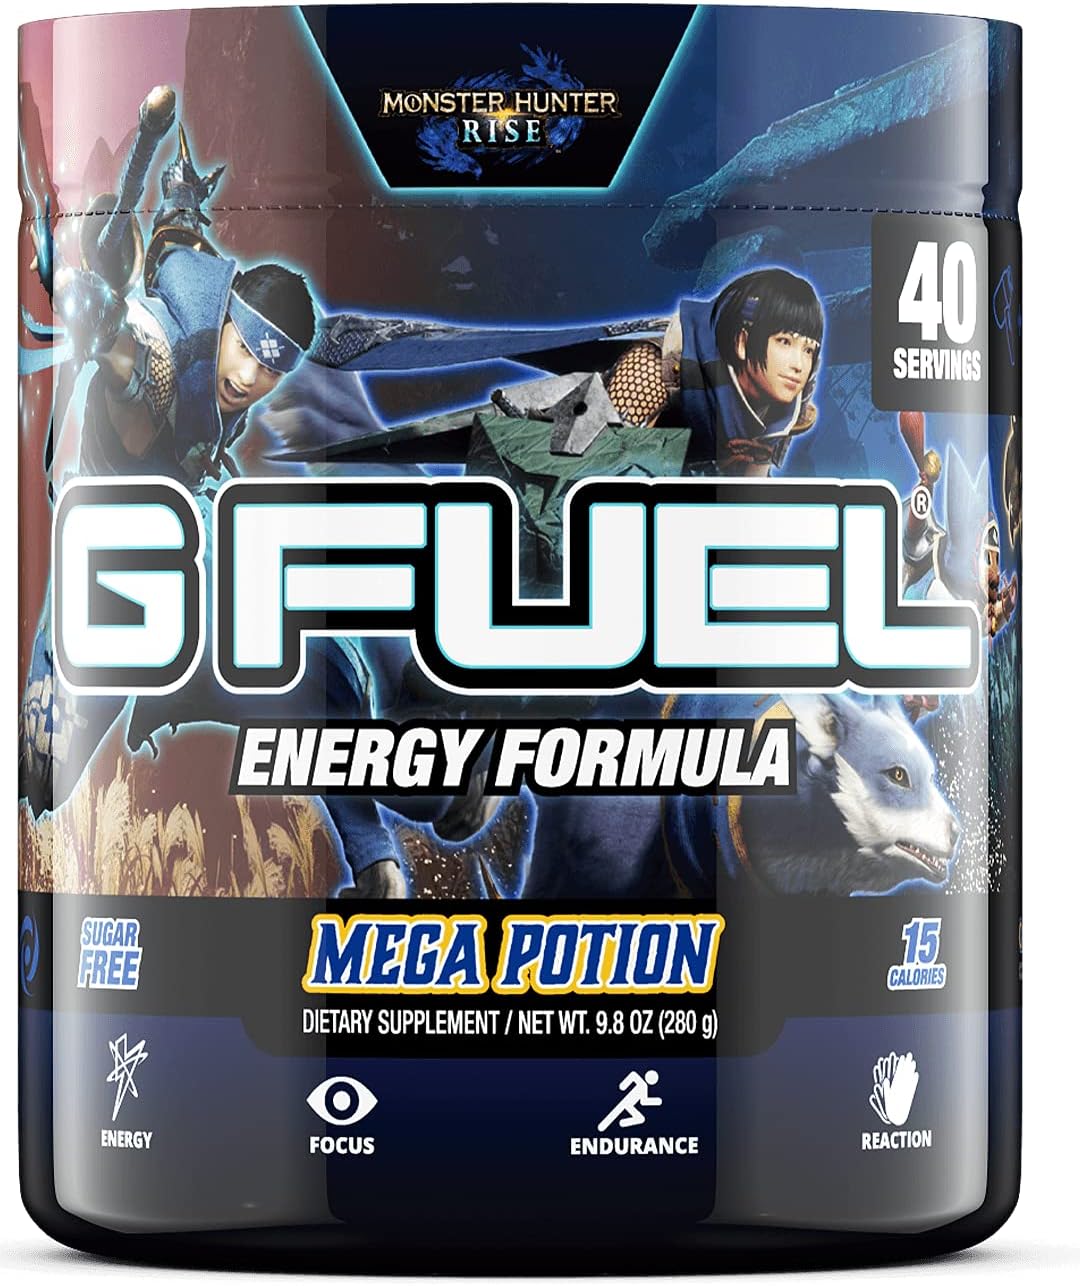 G fuel Monster Hunter Rise Energy Powder, Sugar Free, Clean Caffeine F